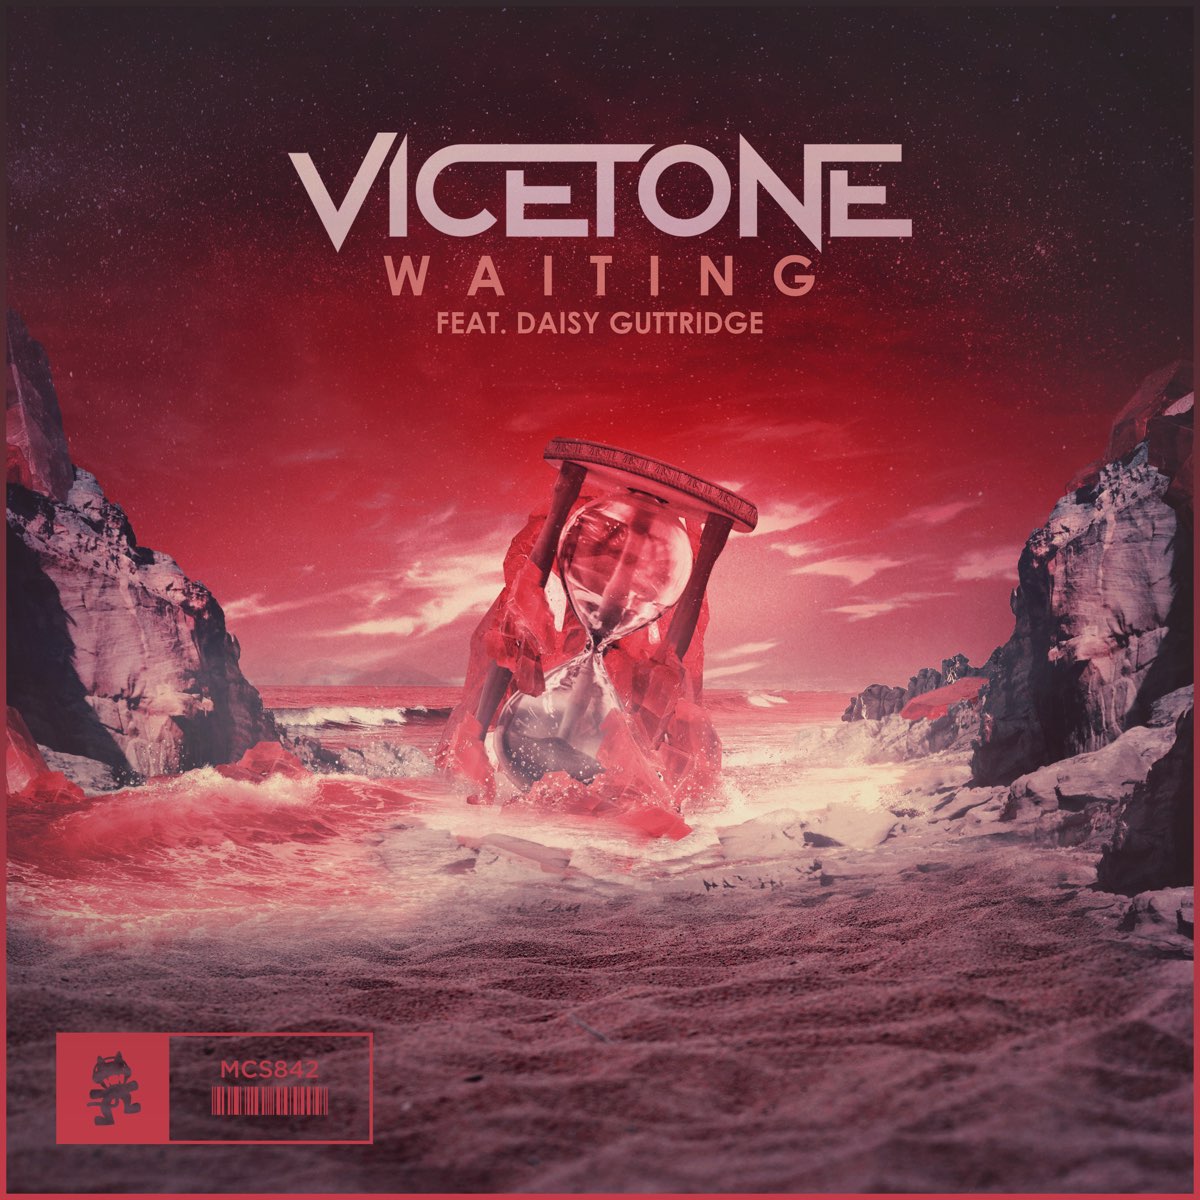 Vicetone featuring Daisy Guttridge — Waiting cover artwork